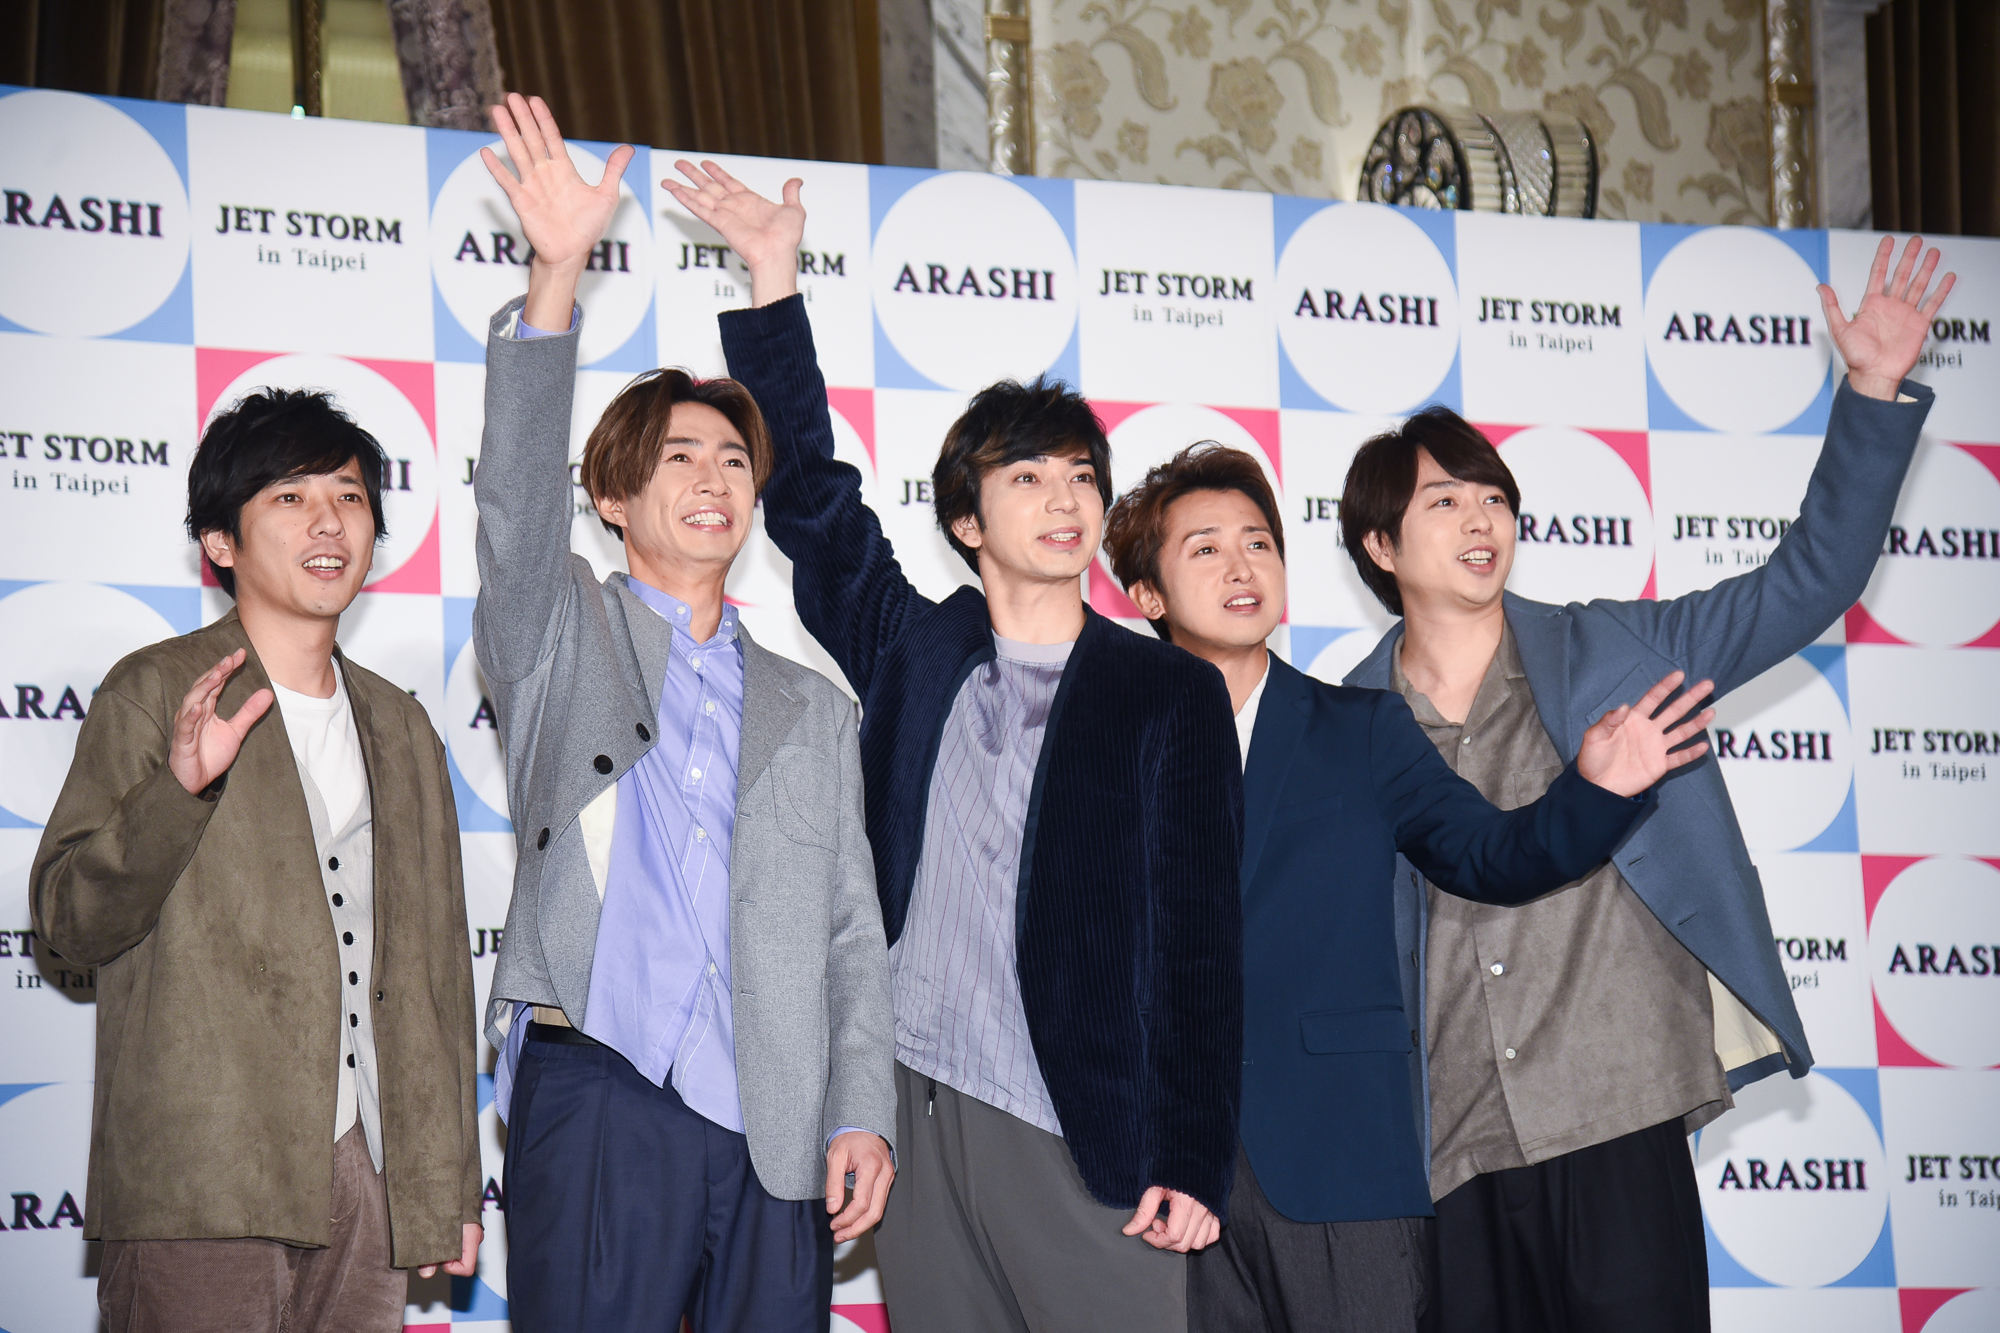 Arashi's last album pre-hiatus, This Is Arashi, tops Oricon ranking again after 8 weeks